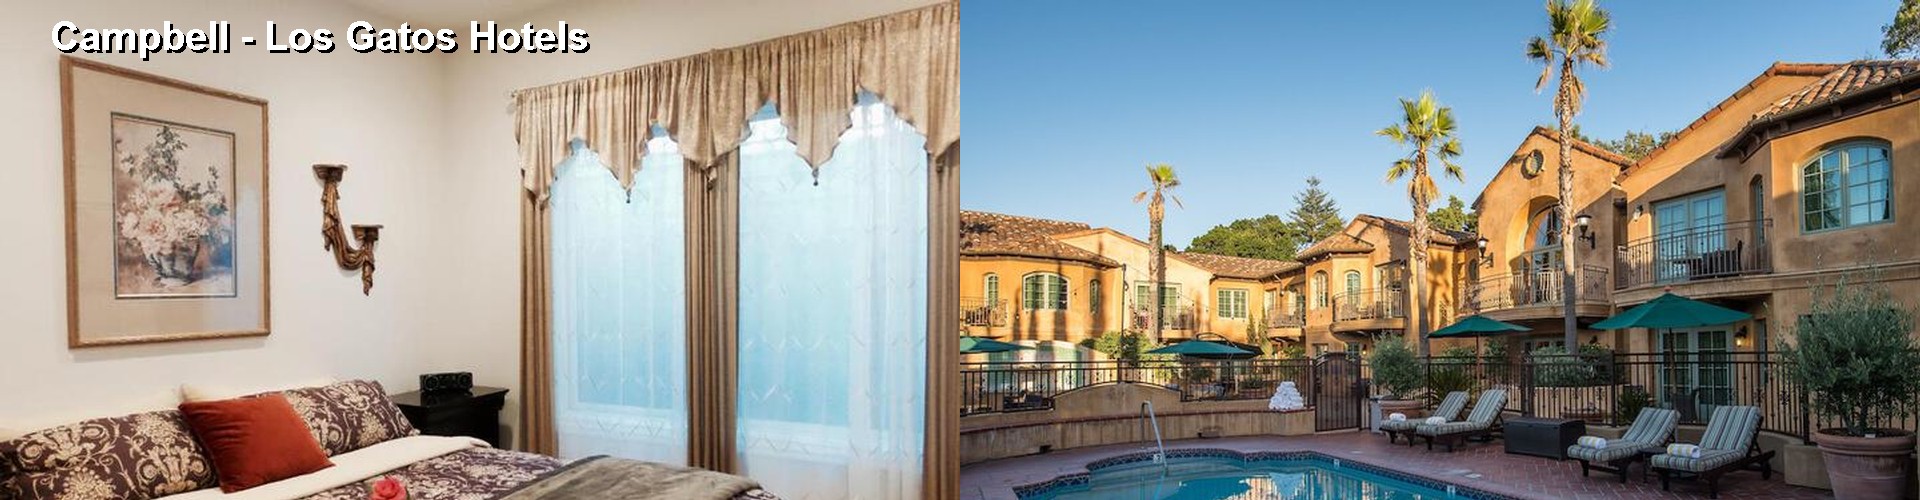 5 Best Hotels near Campbell - Los Gatos